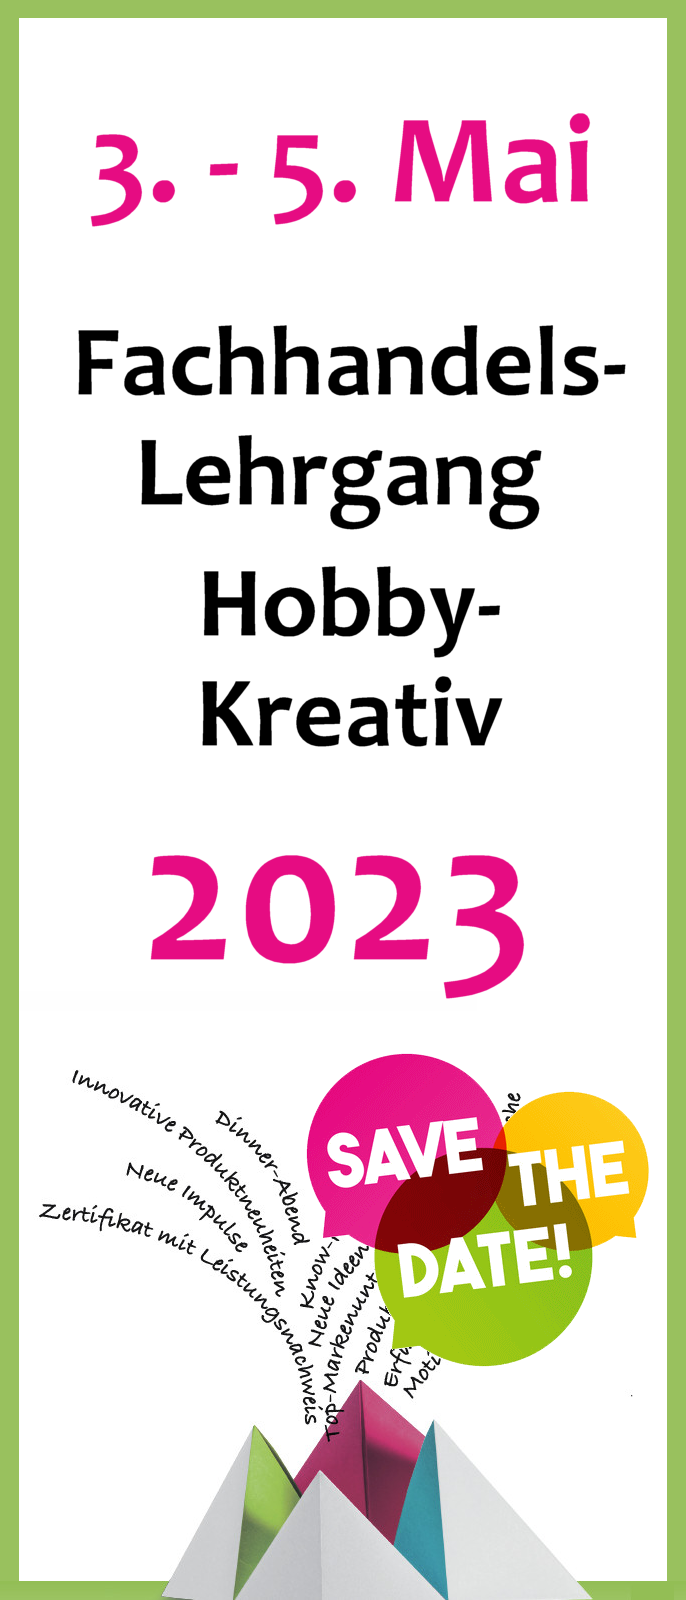 Einladung zum Fachhandels-Lehrgang Hobby-Kreativ 2023